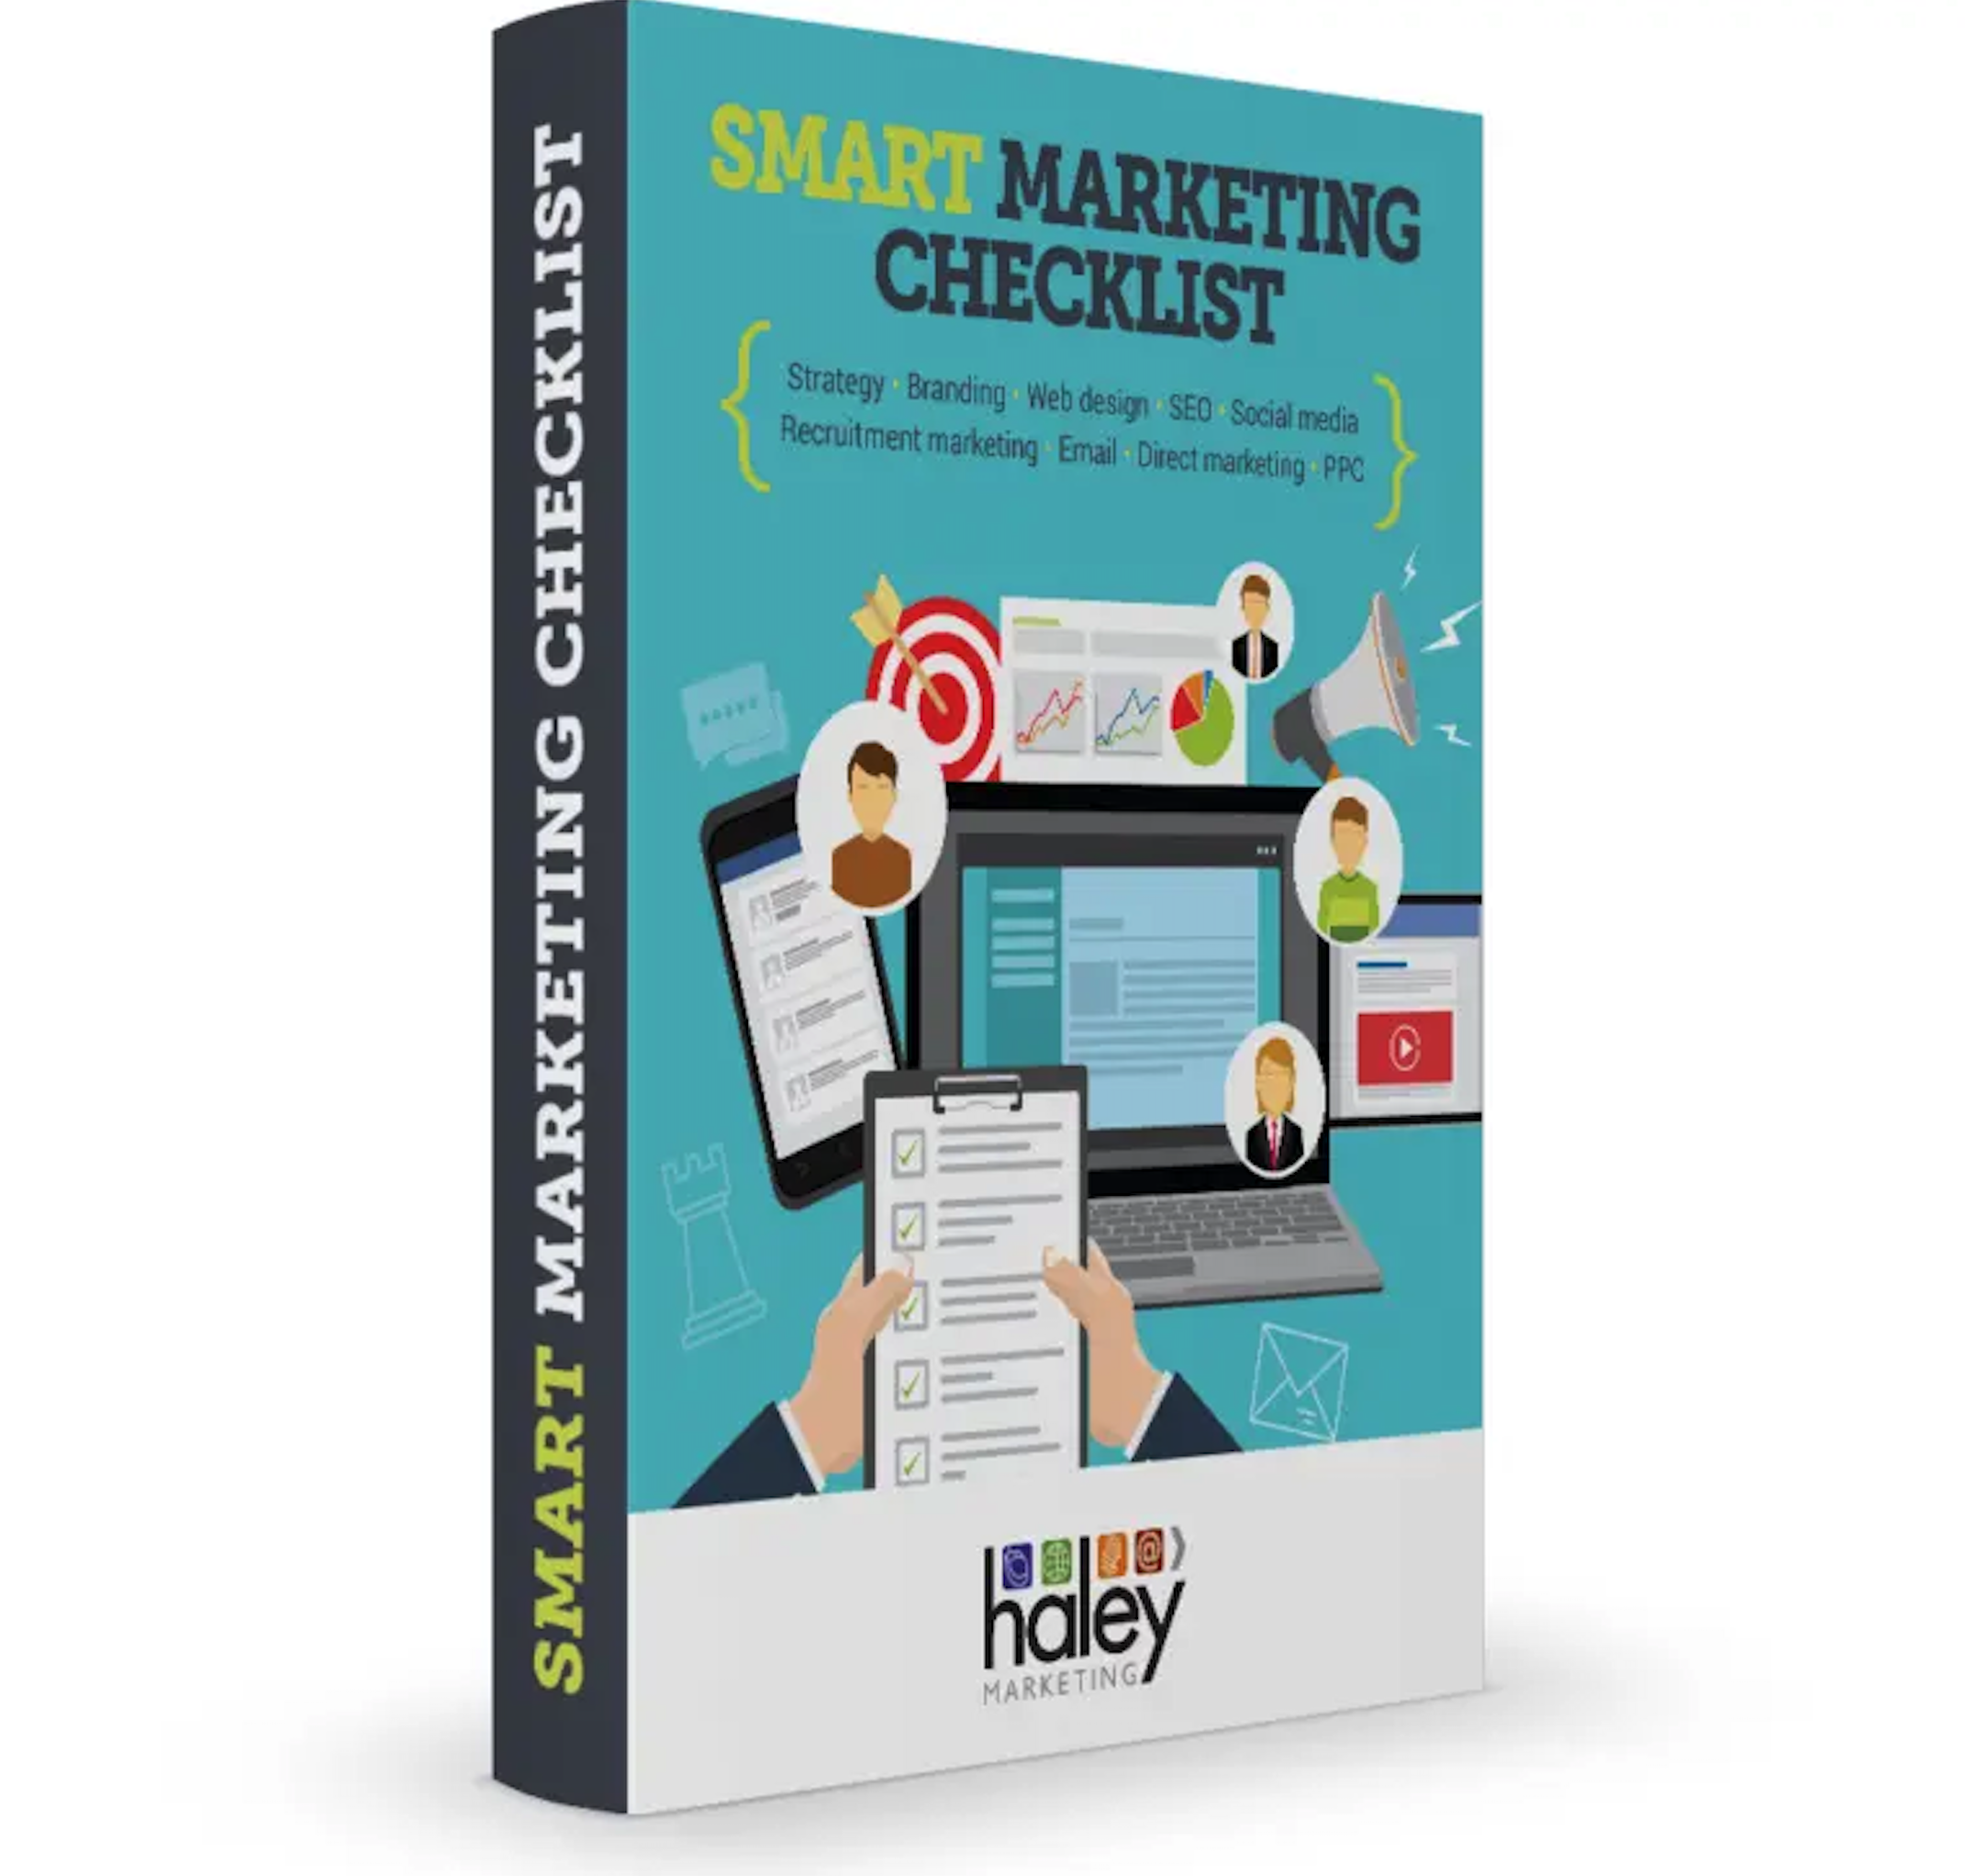 The Smart Marketing Checklist